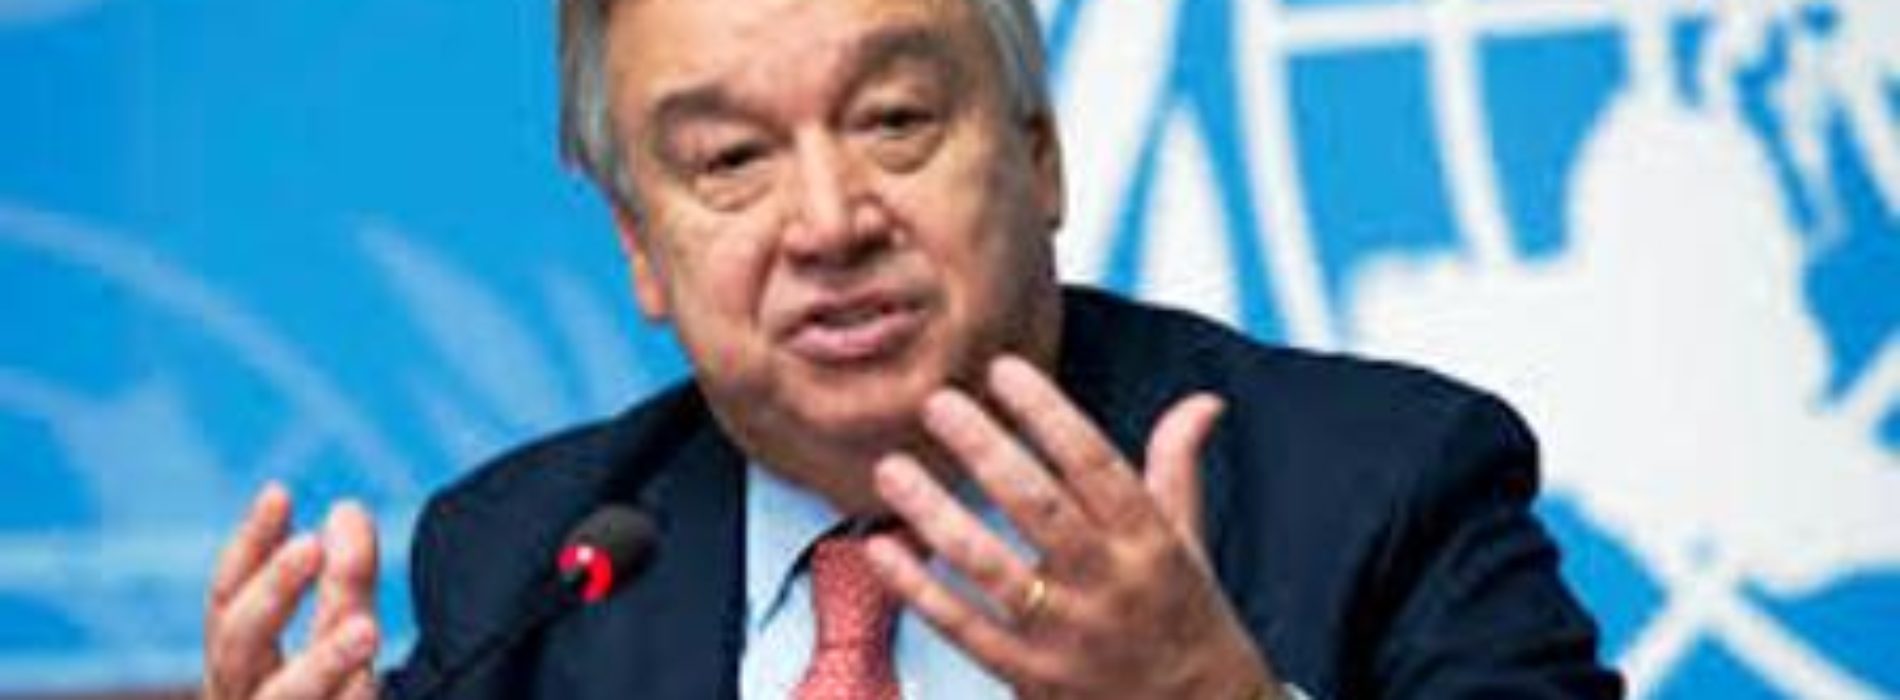 World Health Day: UN Secretary General hails health workers